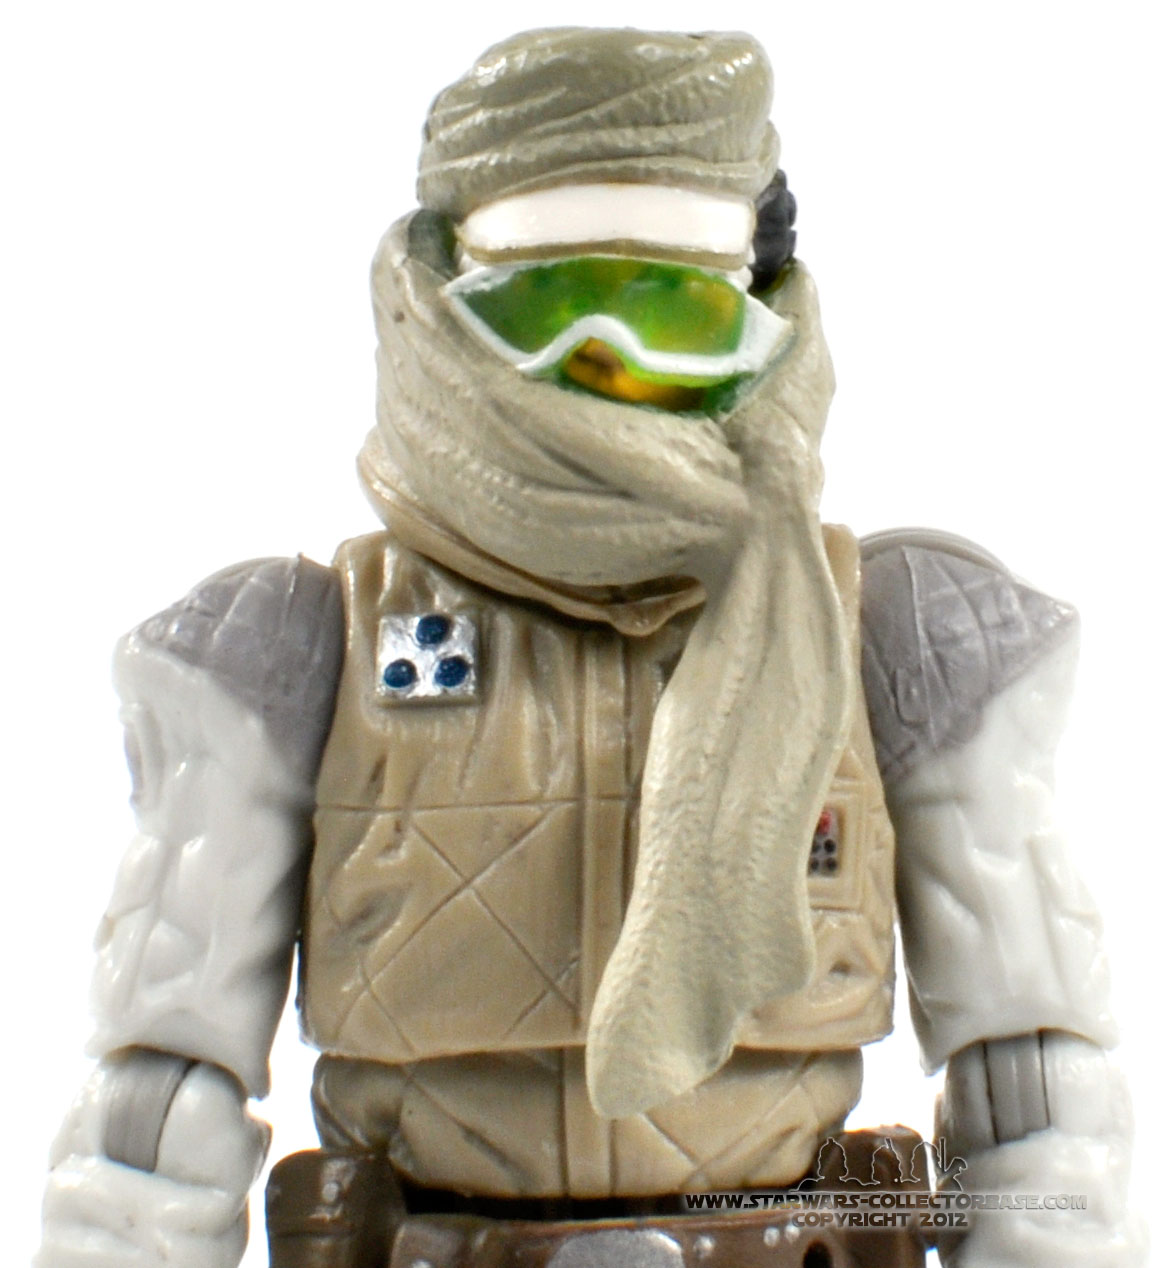 Luke Skywalker (Hoth Outfit) VC95